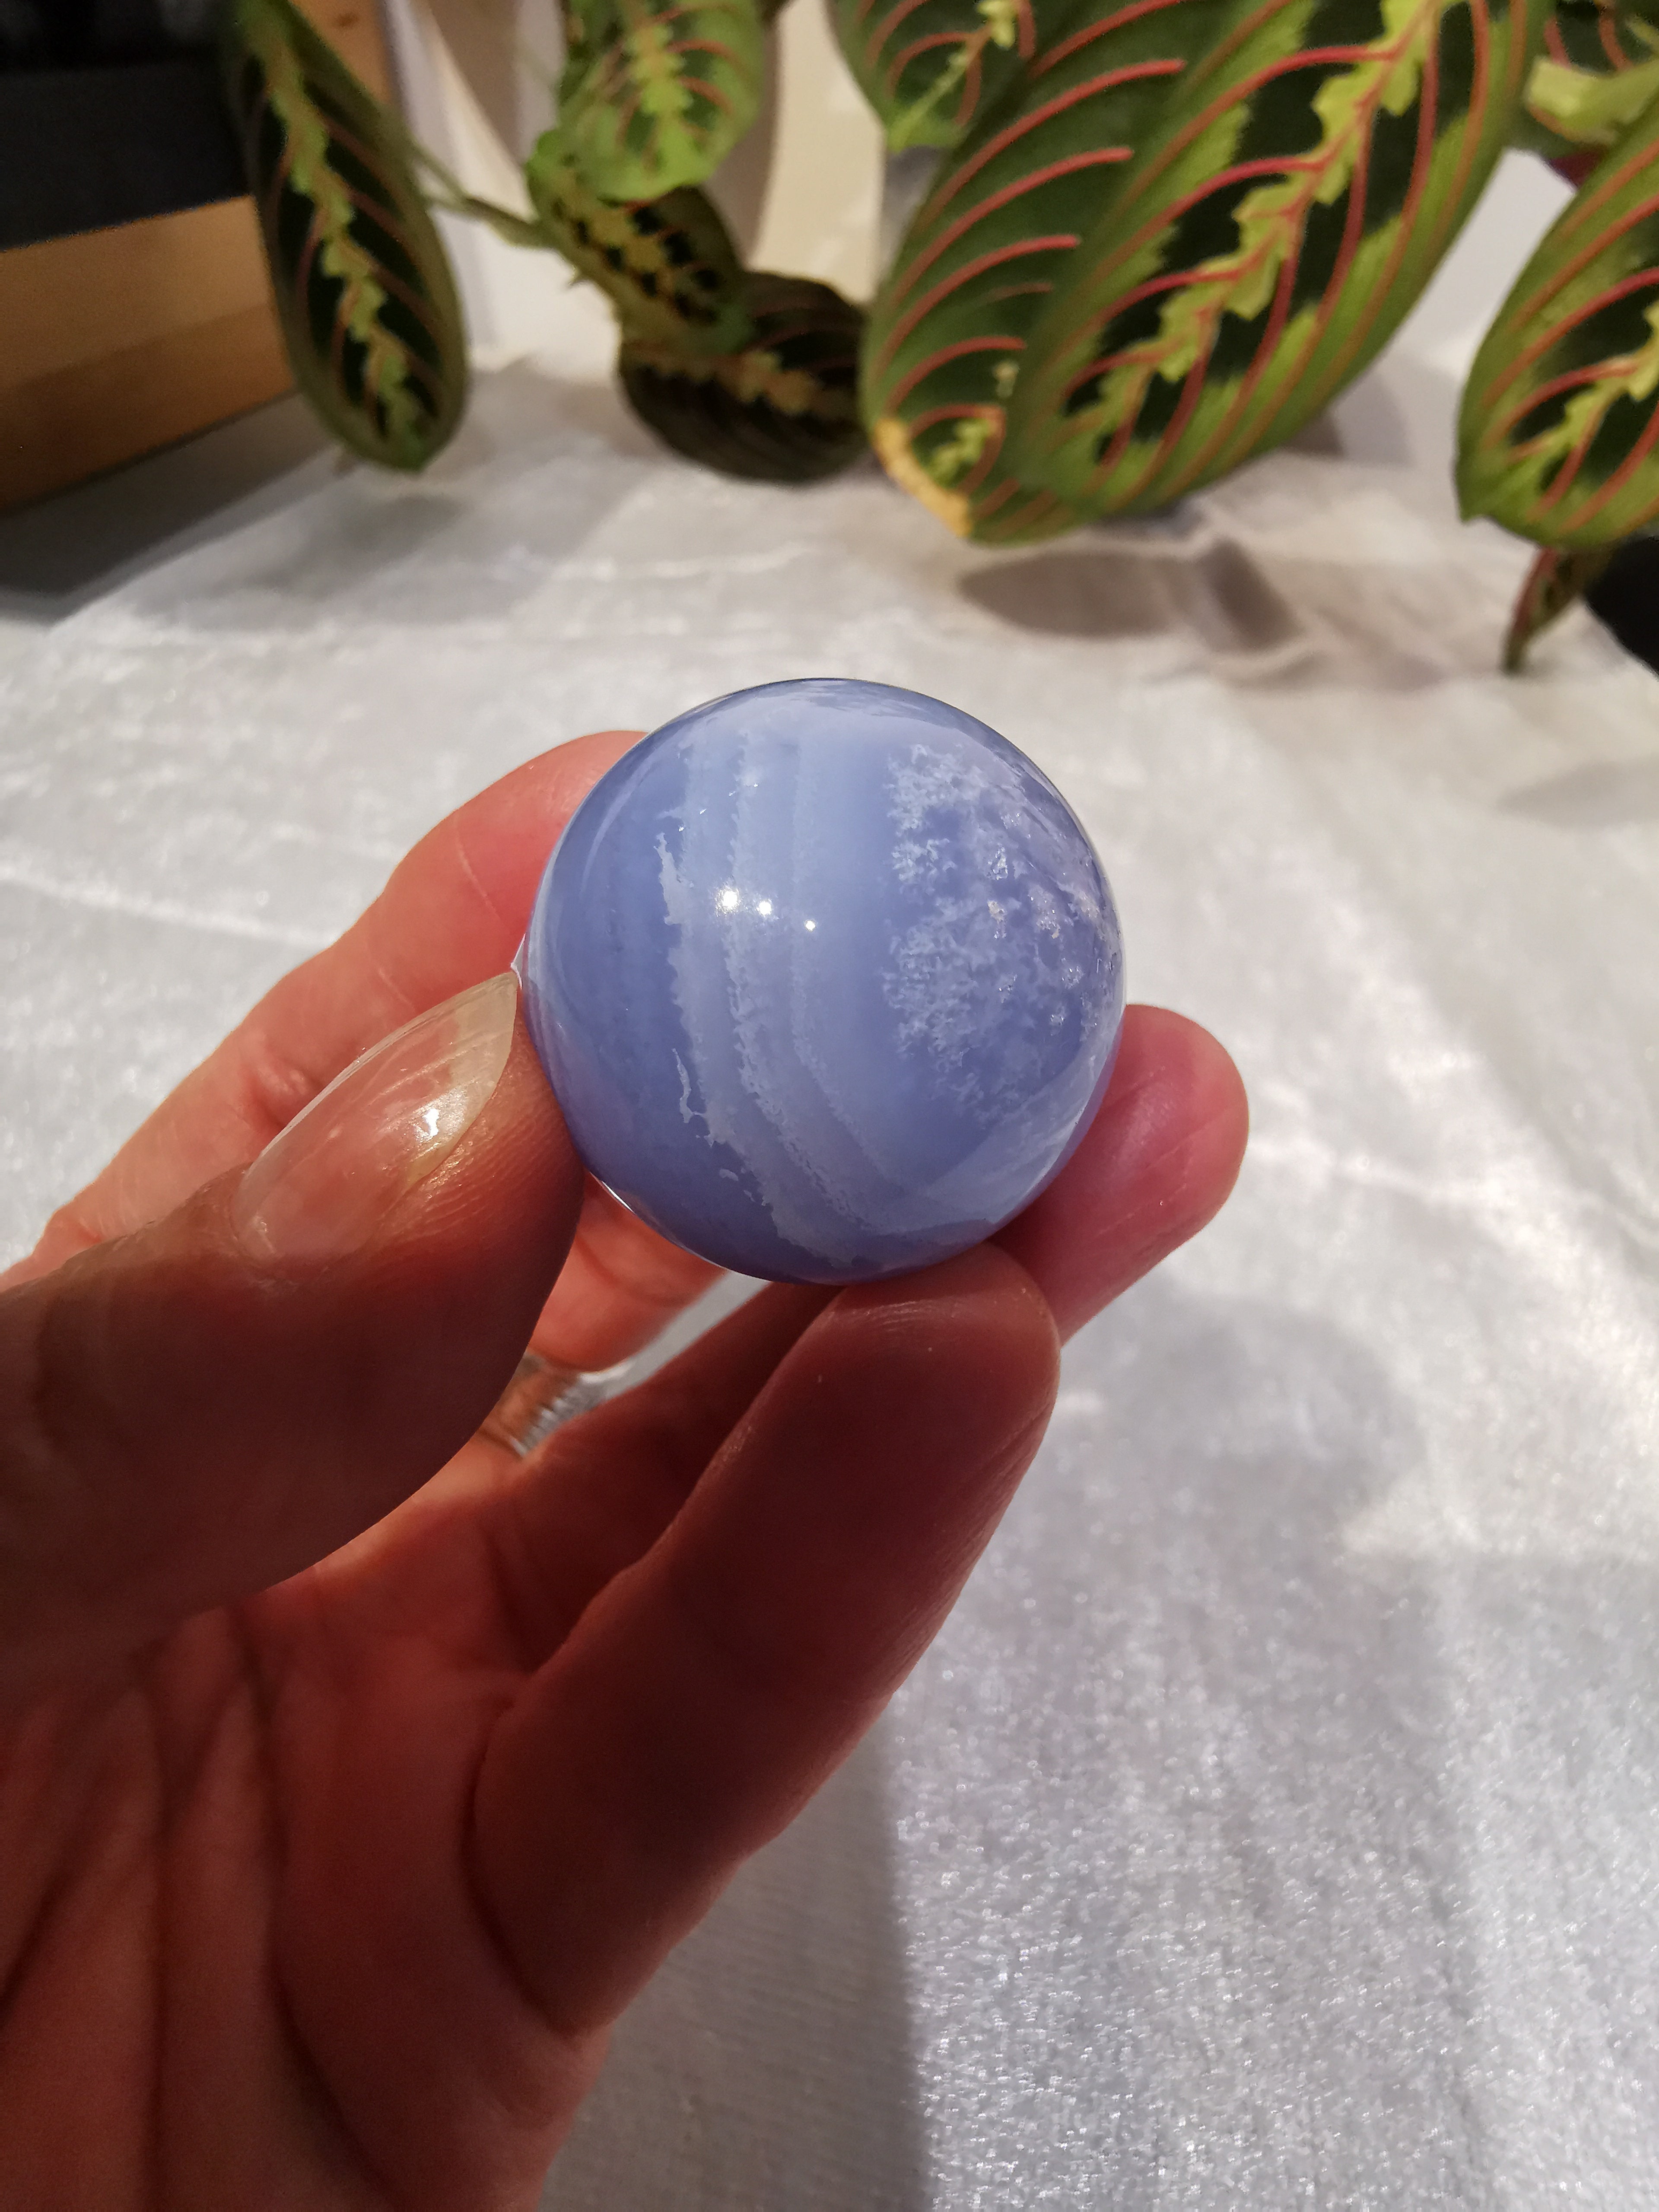 Blue Lace Agate Sphere - 2.9cm (diameter)